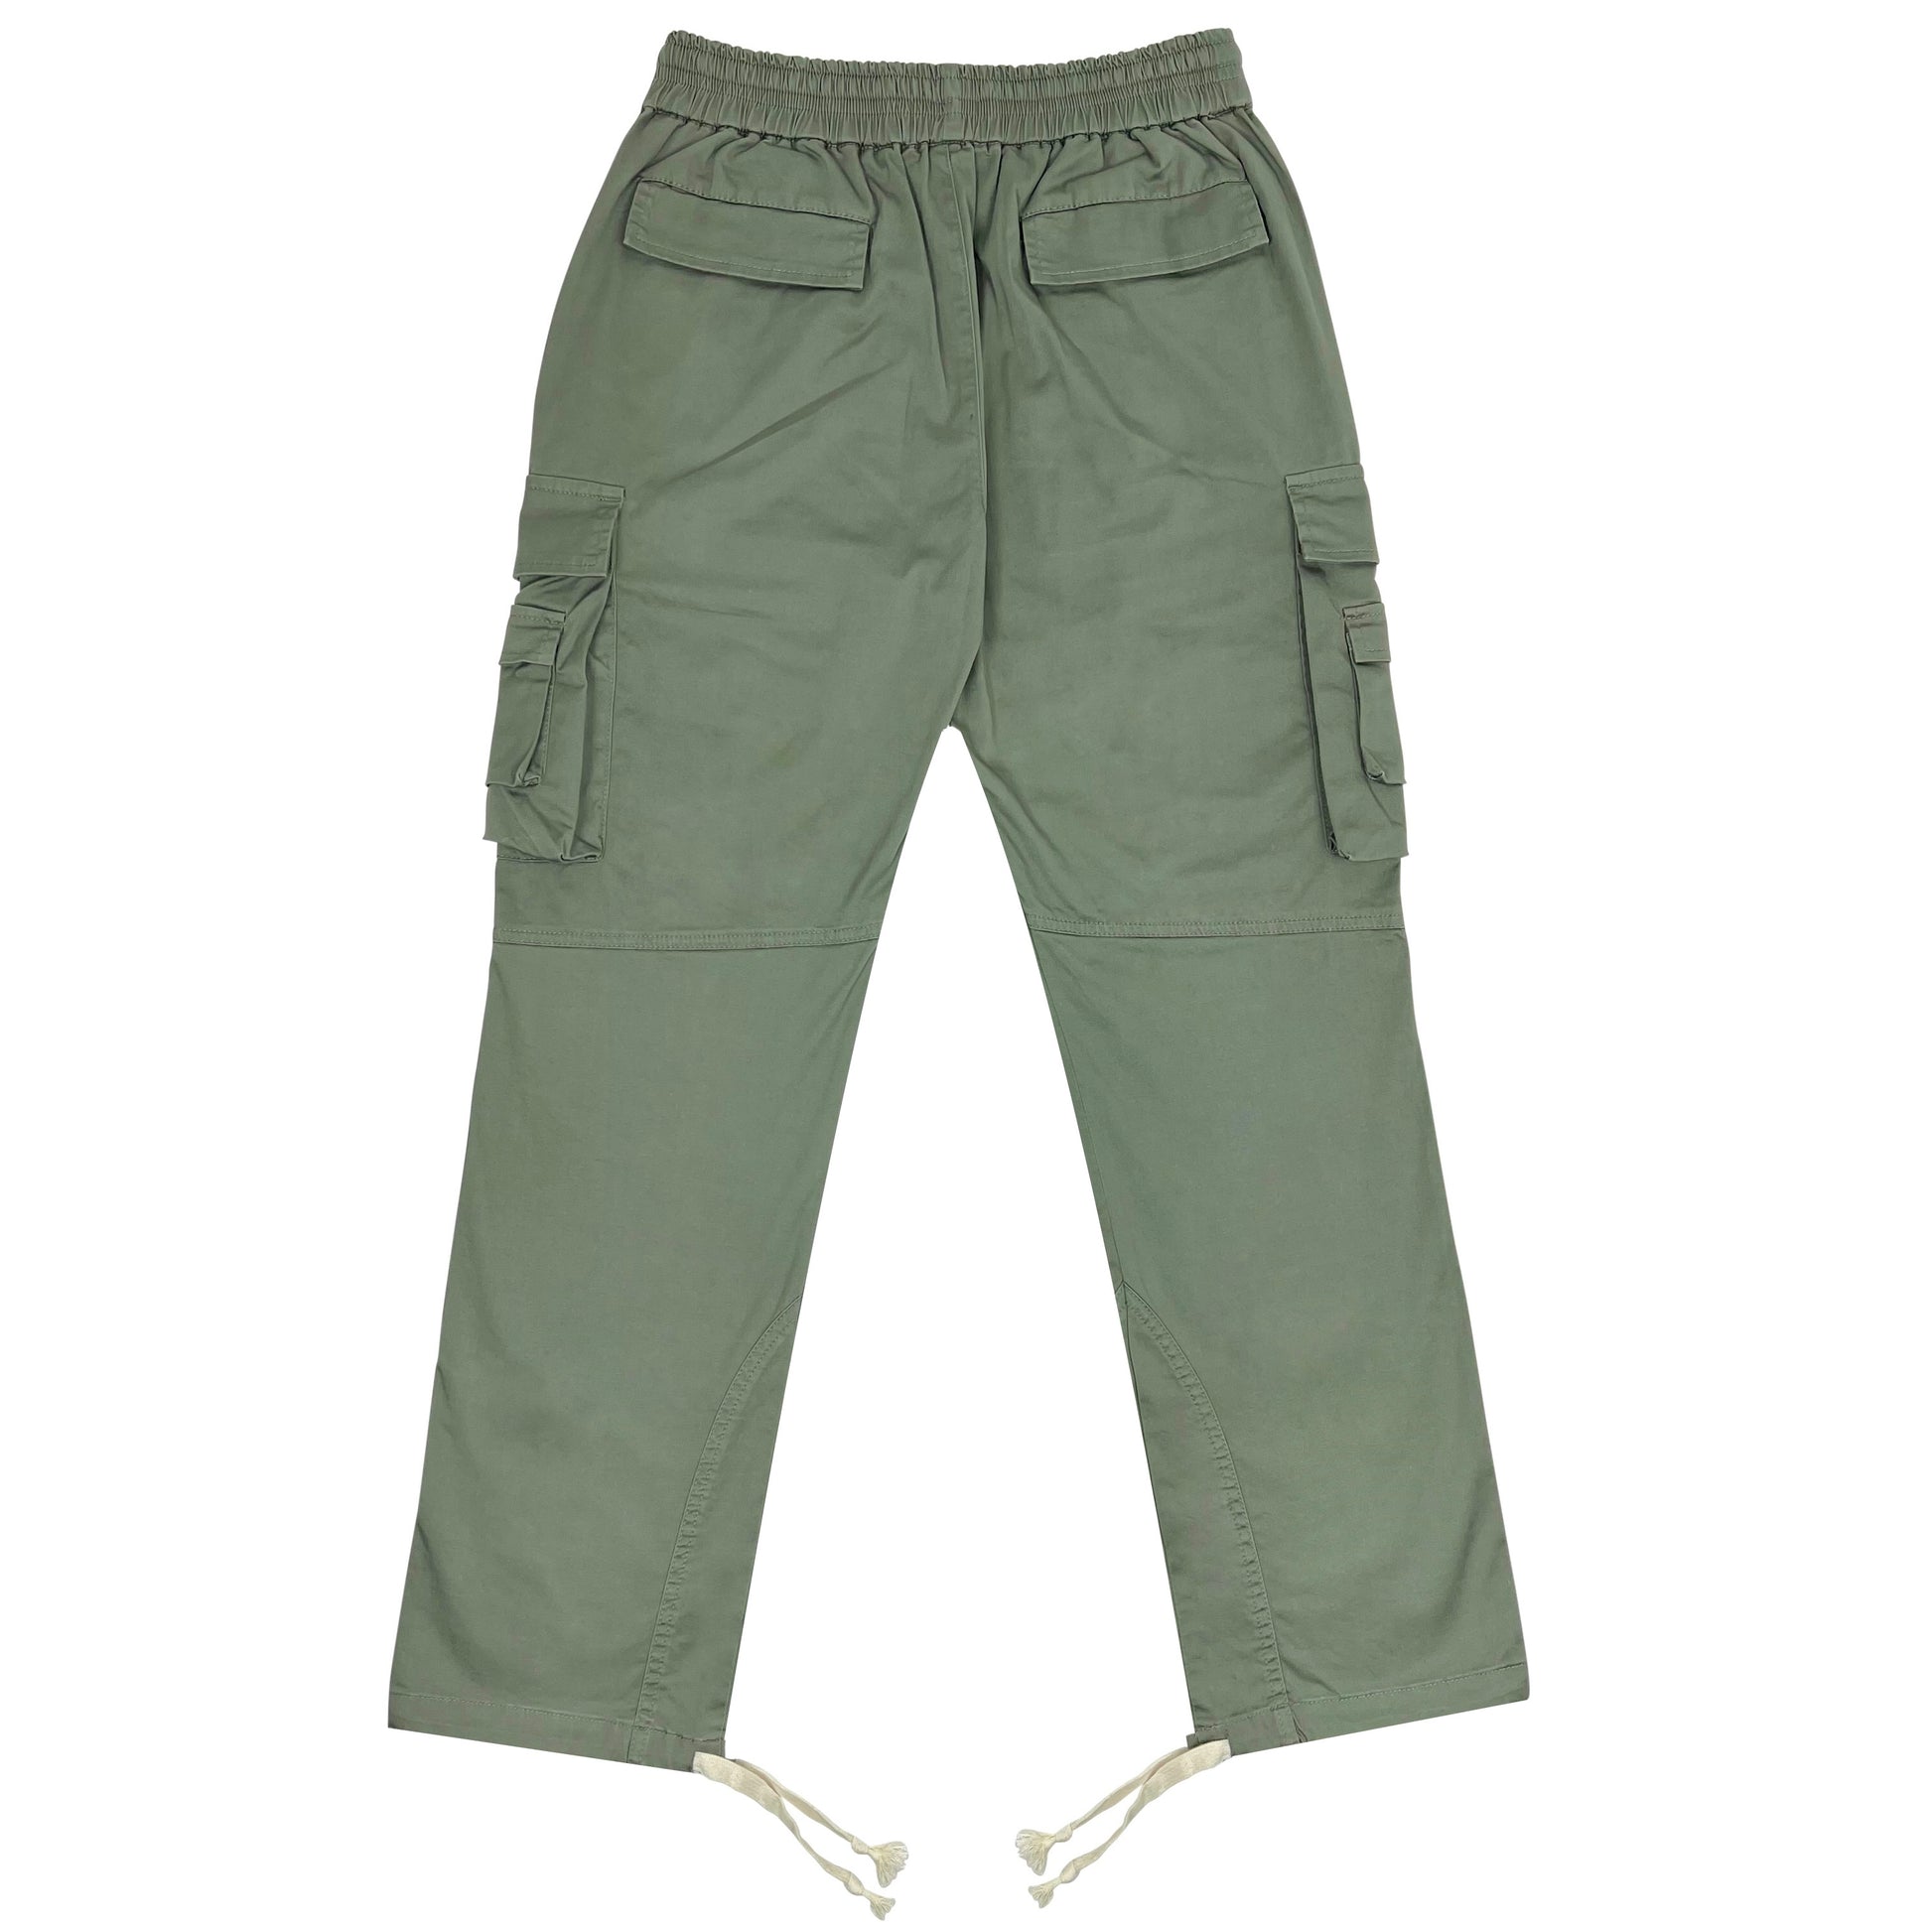 Bledla Multi Cargo Cotton Pant-Sage Green Cotton Cargo Pants-Multi Pocket Pant-Bled Streetwear Pant-Bled Pant-Drawstring Cargo Pant-Vintage Cargo Pant-Olive Cargo Pants